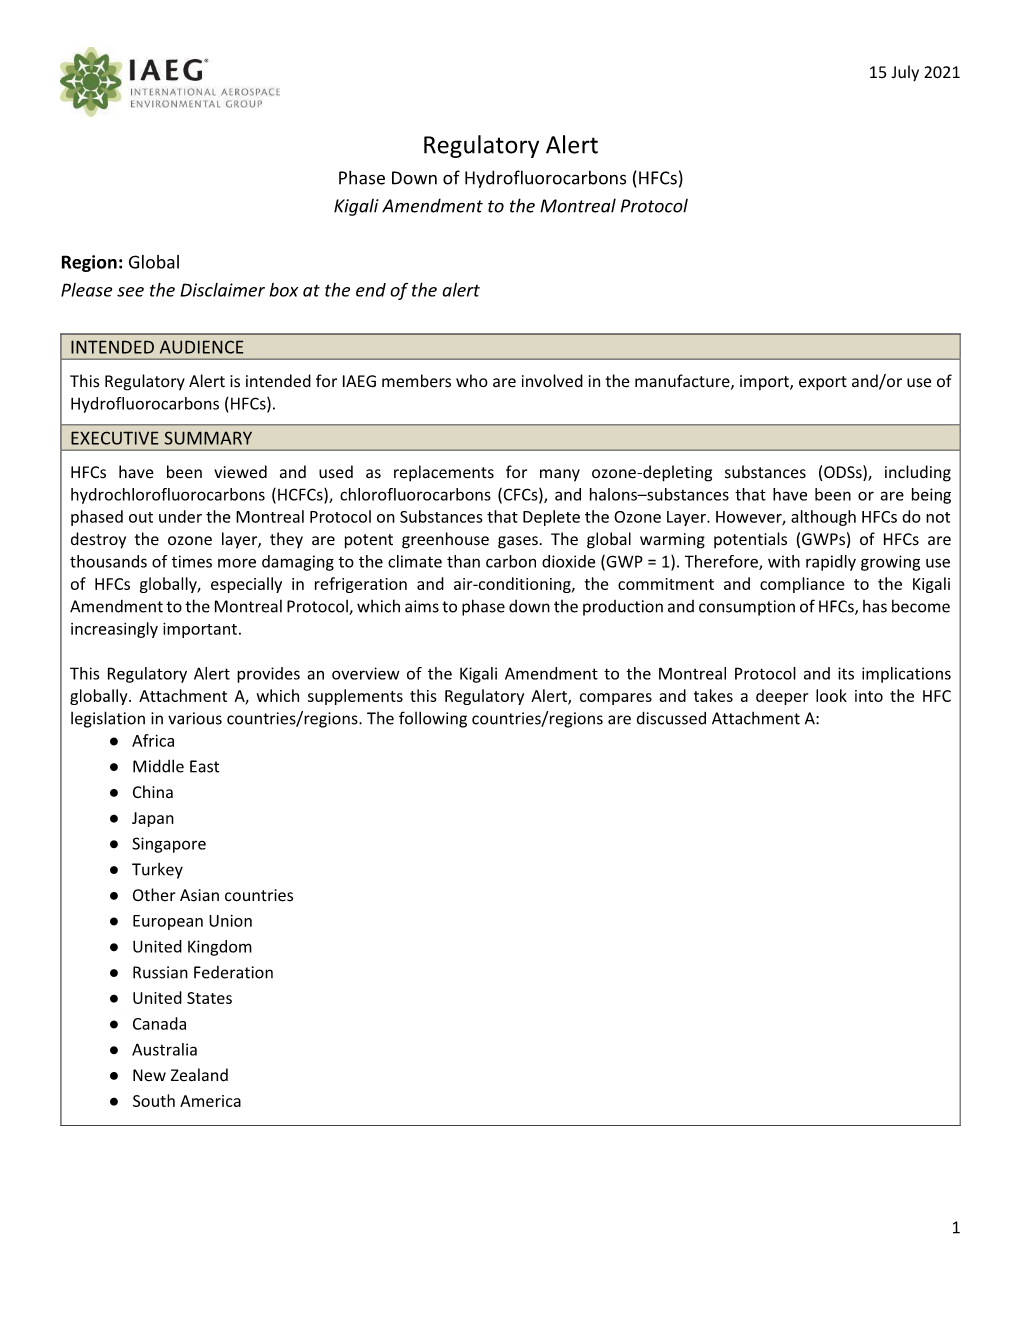 Kigali Amendment and Global HFC Regulations